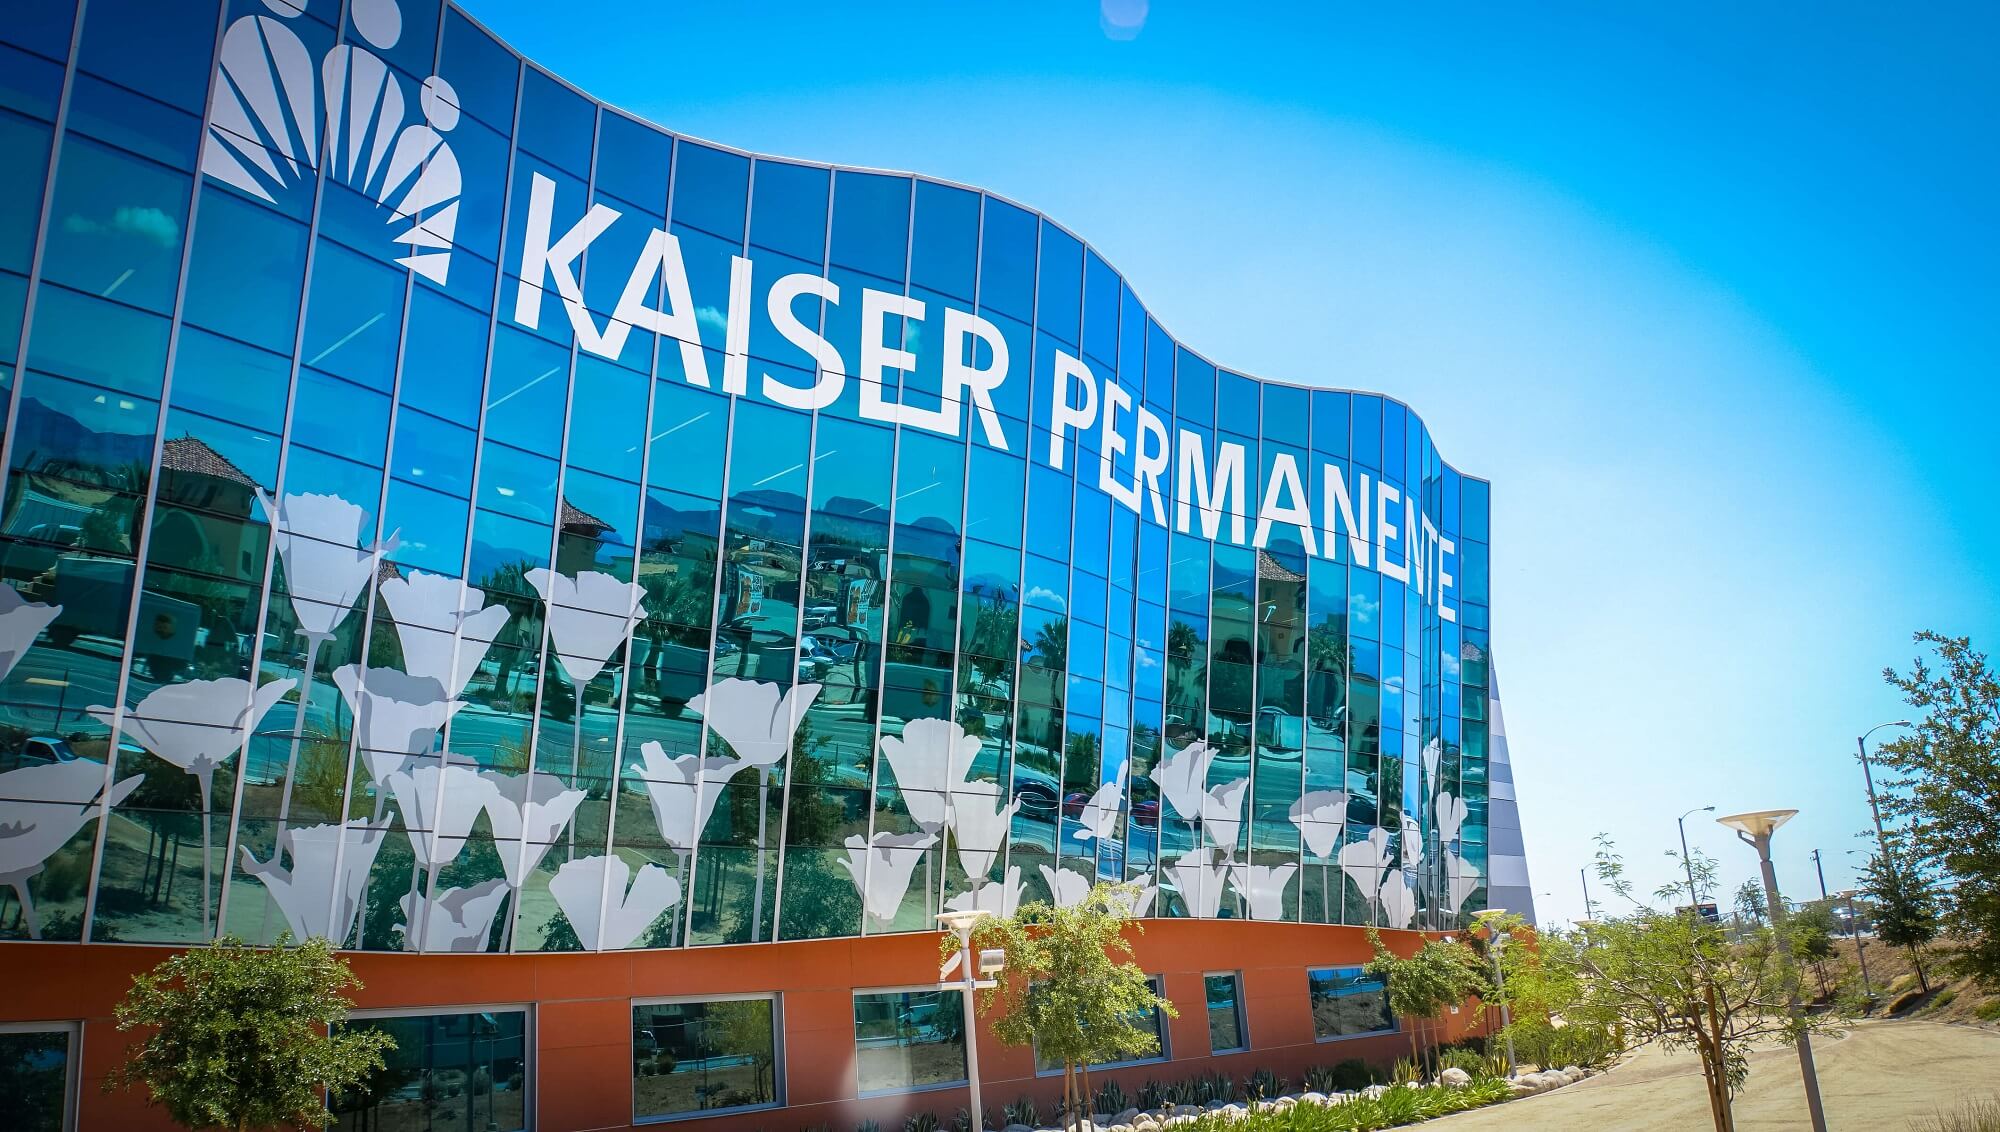 Kaiser permanente lawsuit 2019 nuance powershare login